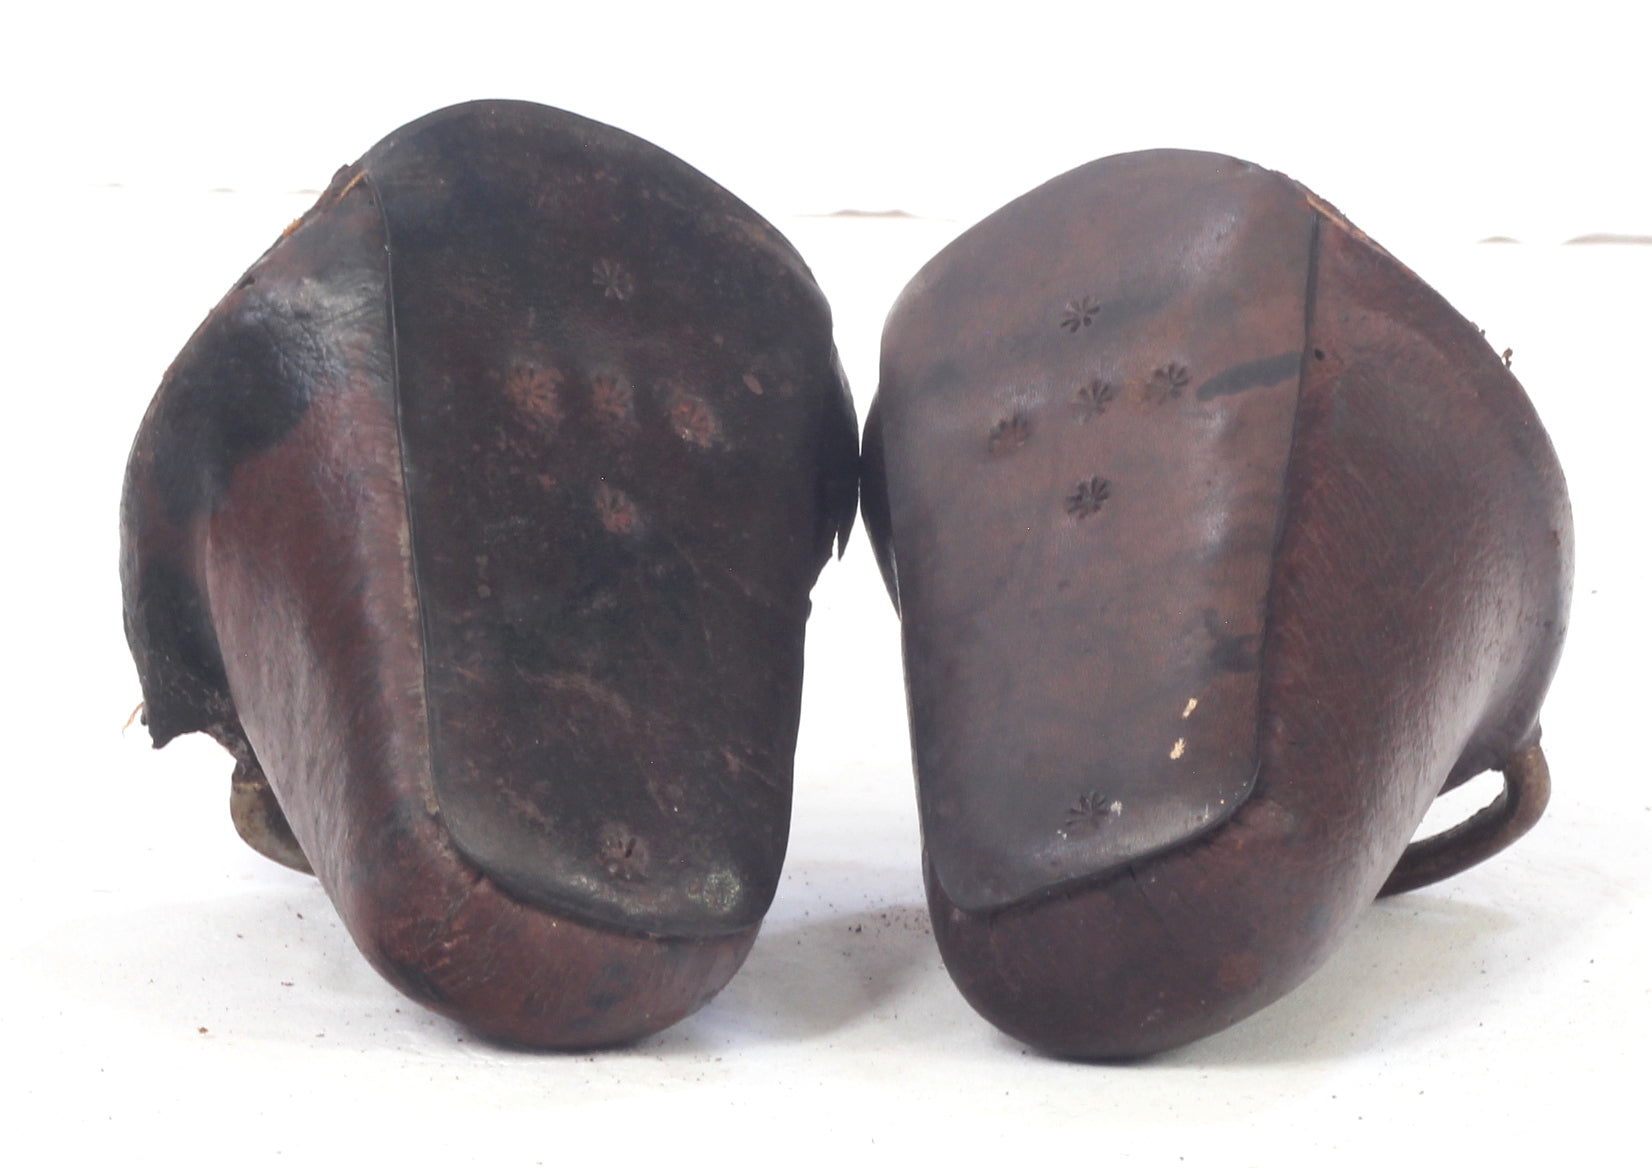 Antique child's leather toe or clog stirrups